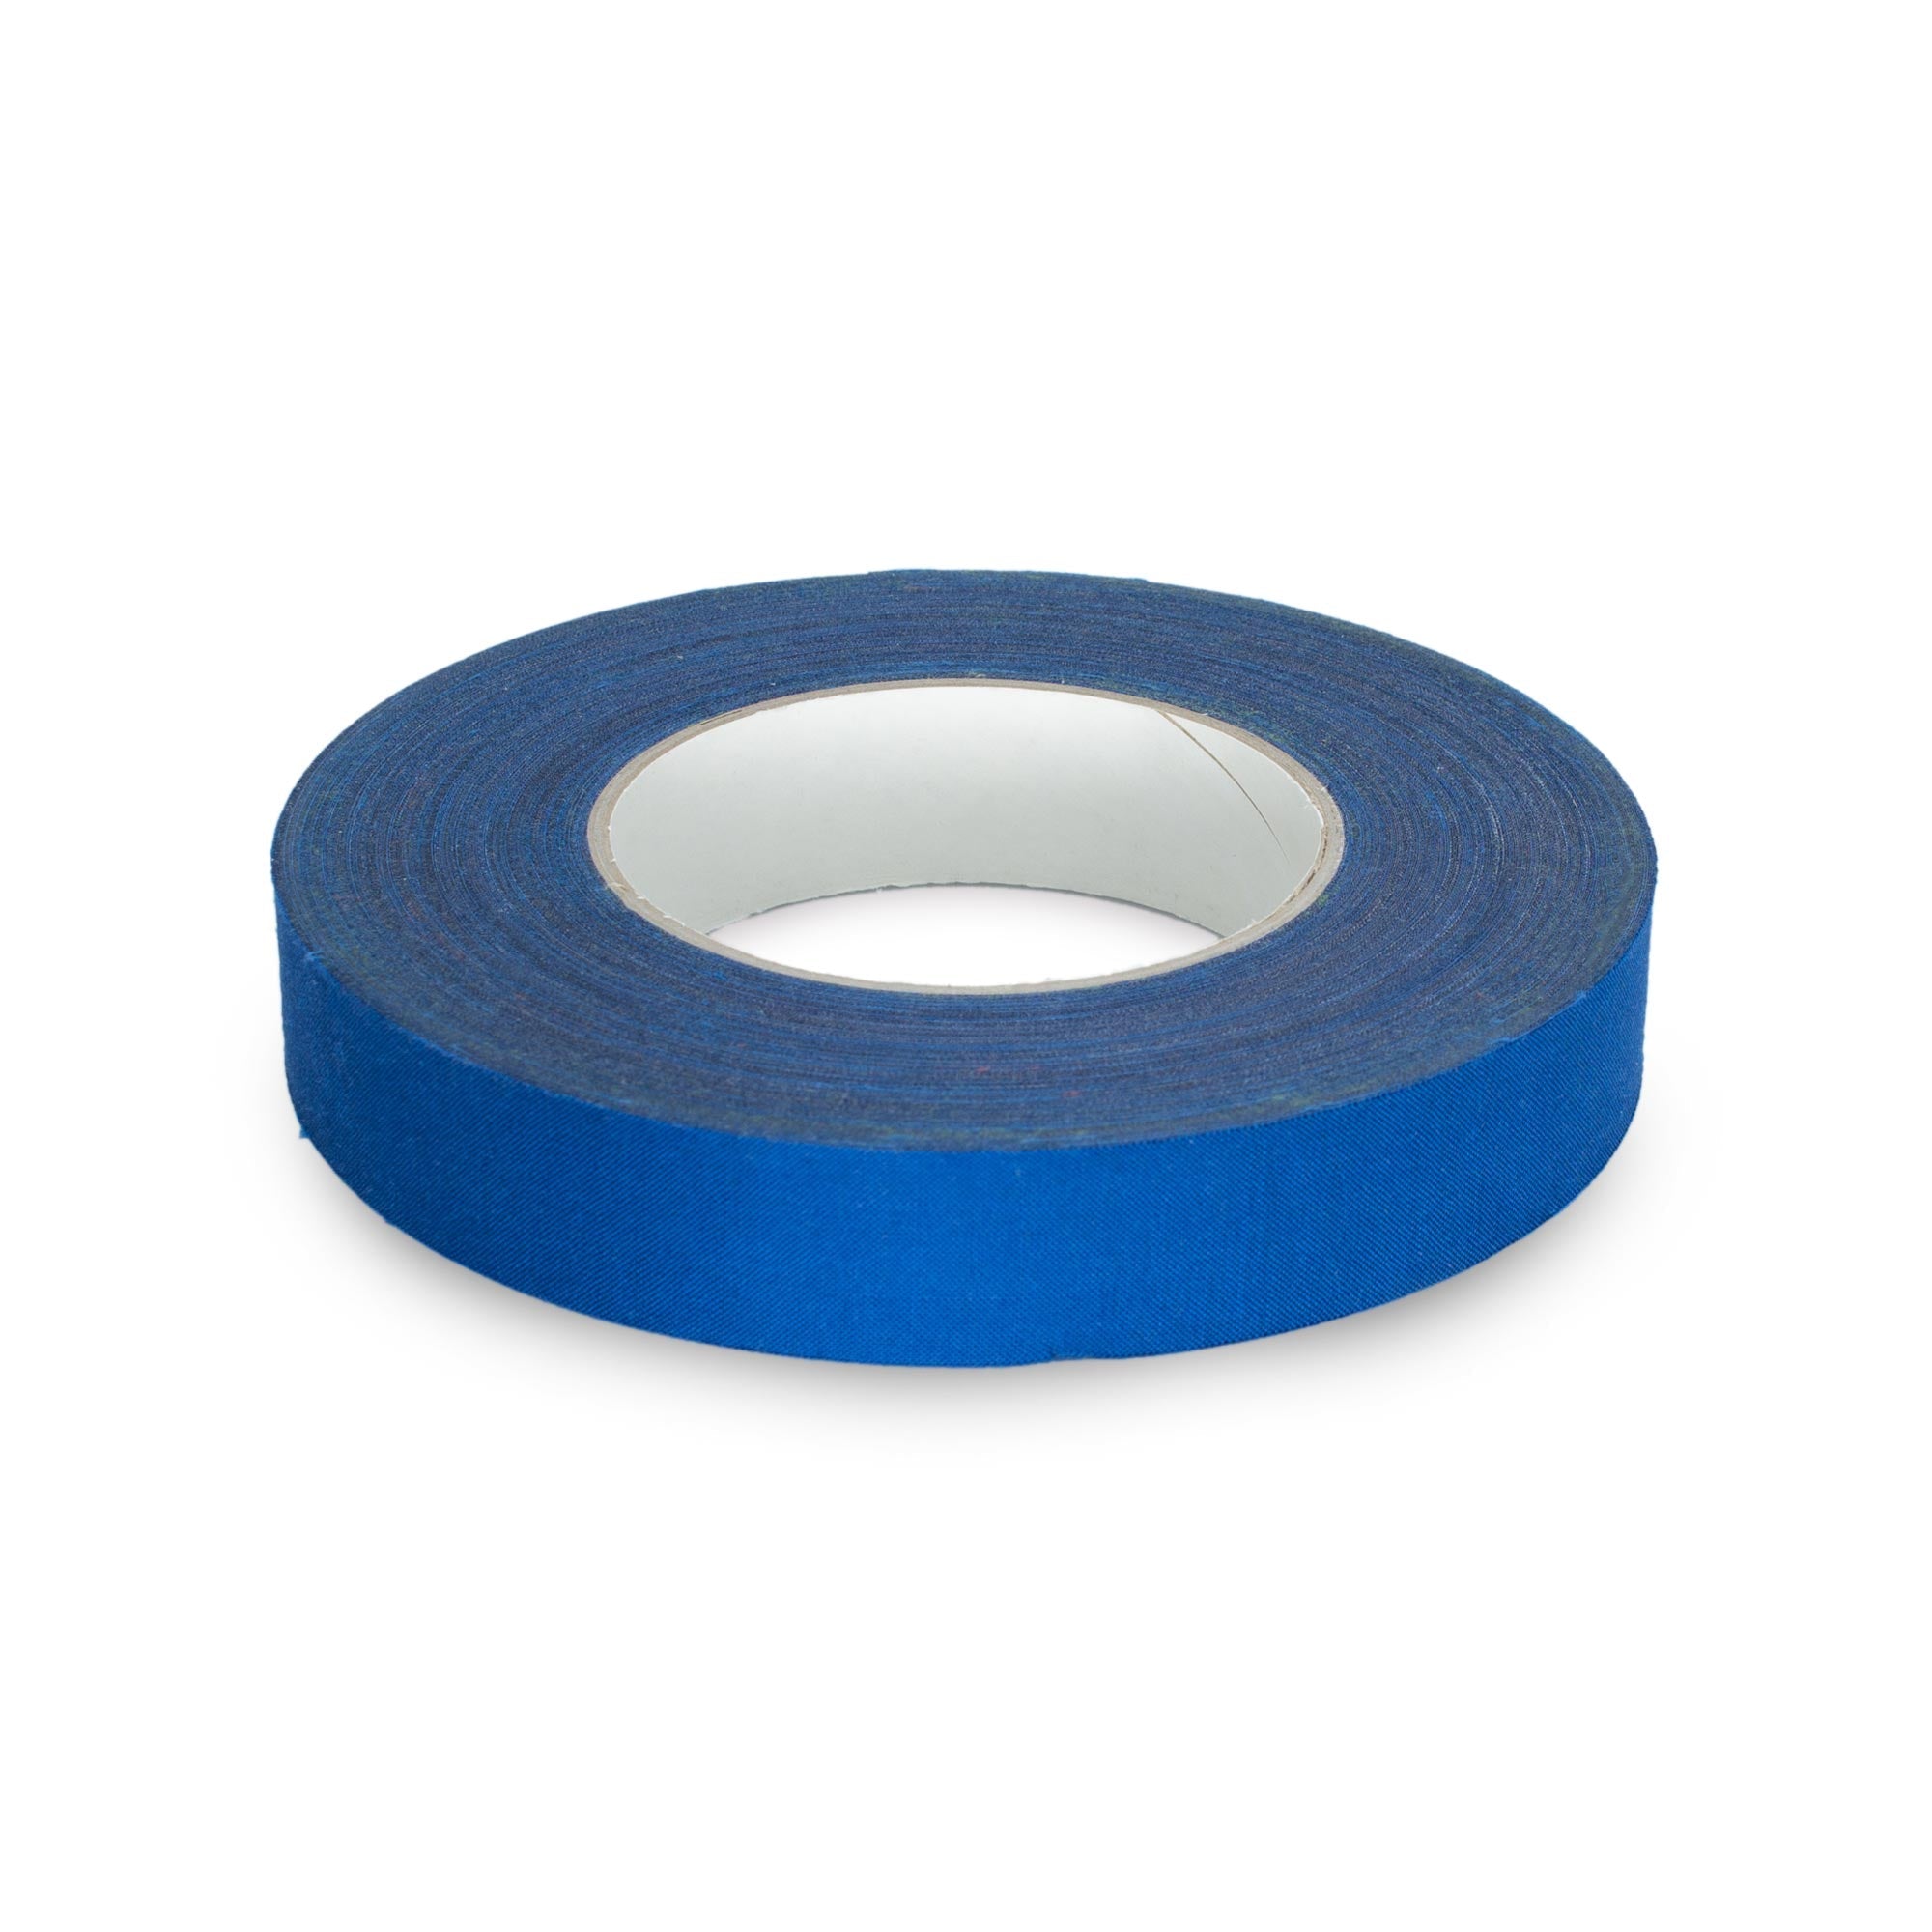 unpackaged roll of blue 2.5cm wide tape